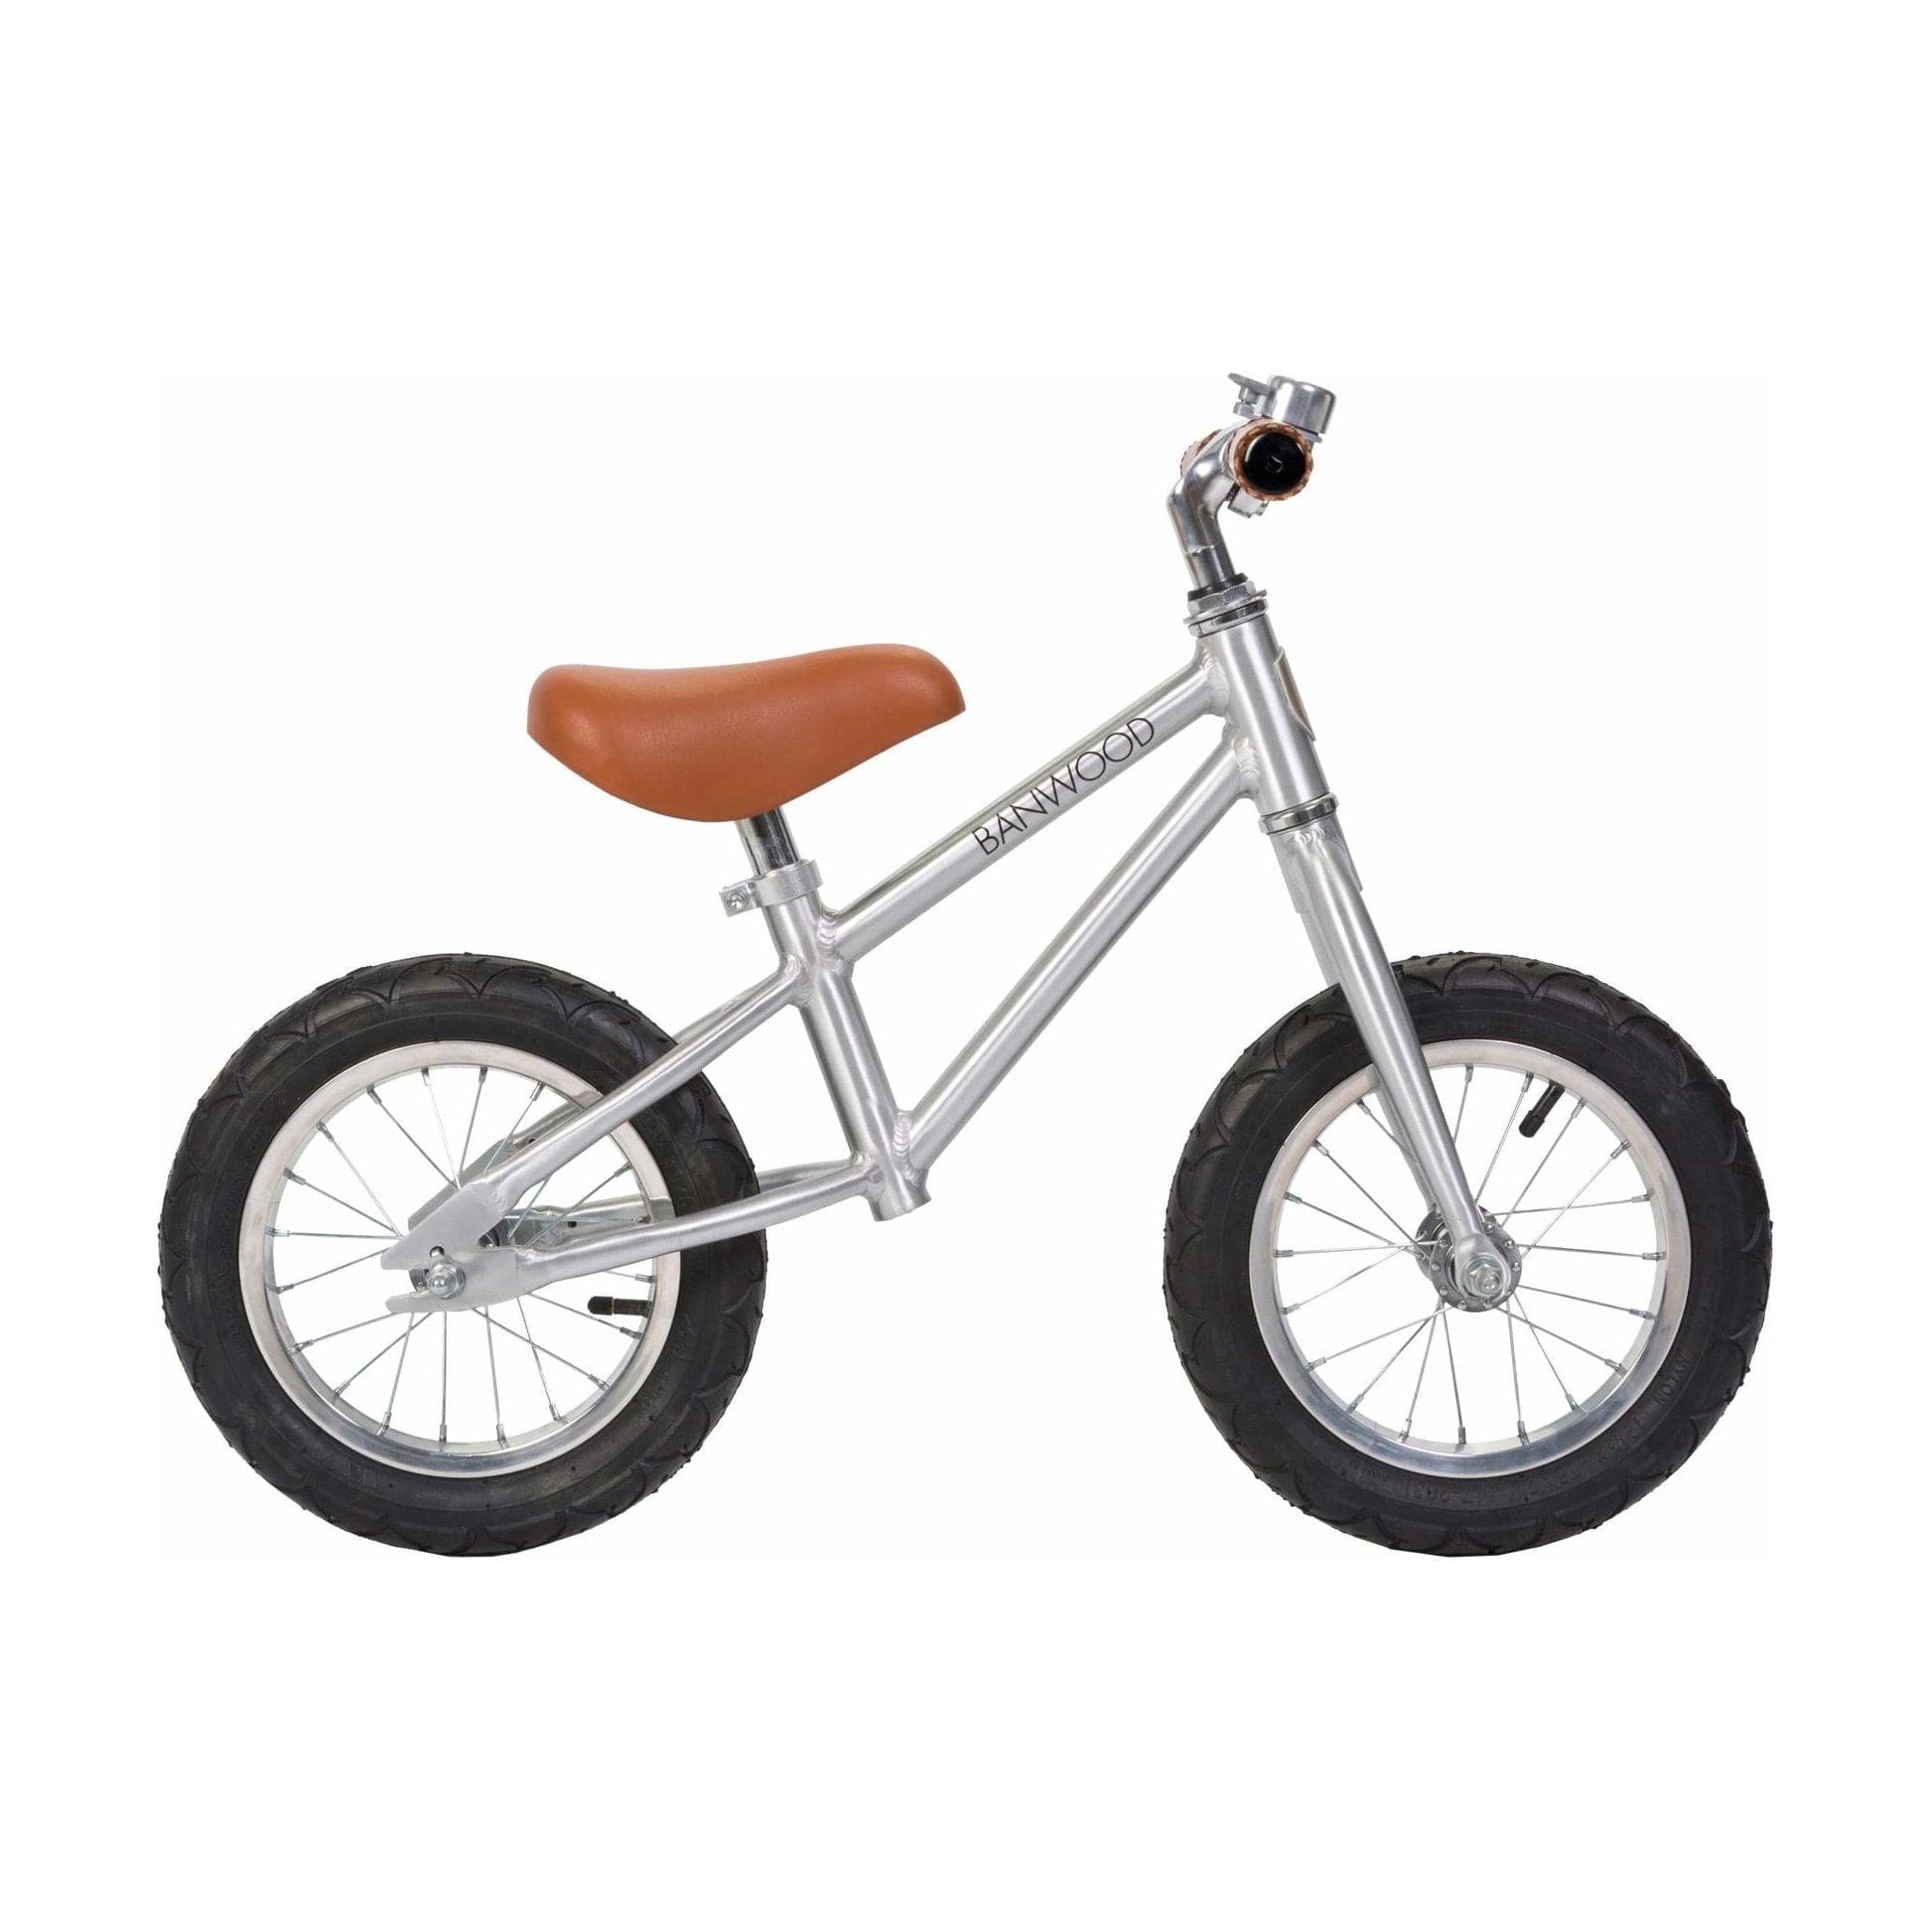 Banwood First Go Balance Bike - Age 3-5 - Chrome - The Online Toy Shop1